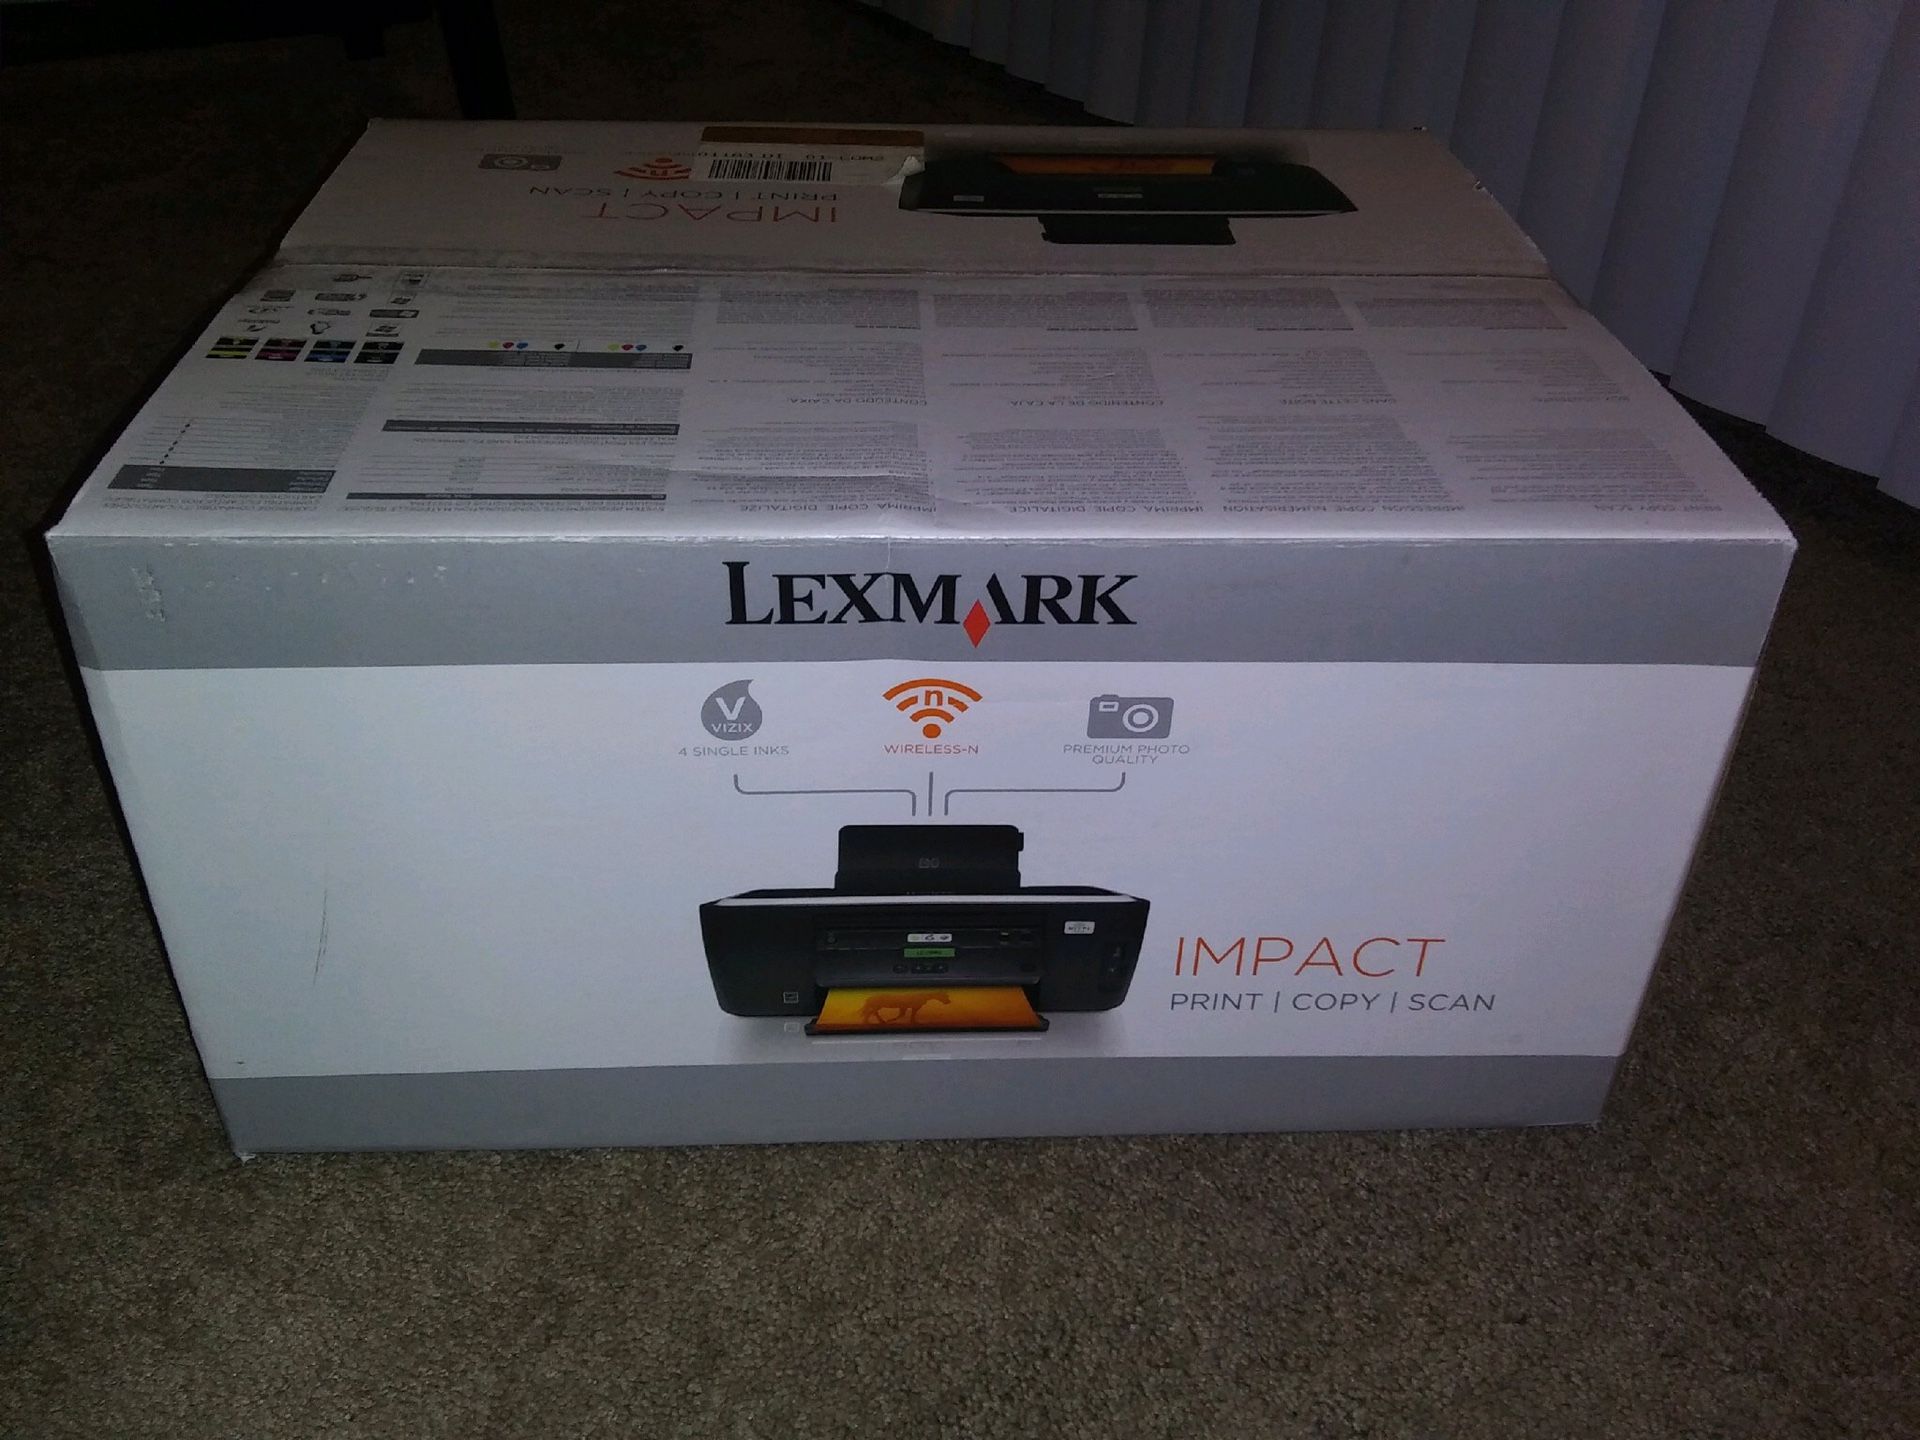 Lexmark impact s301 printer brand new never used